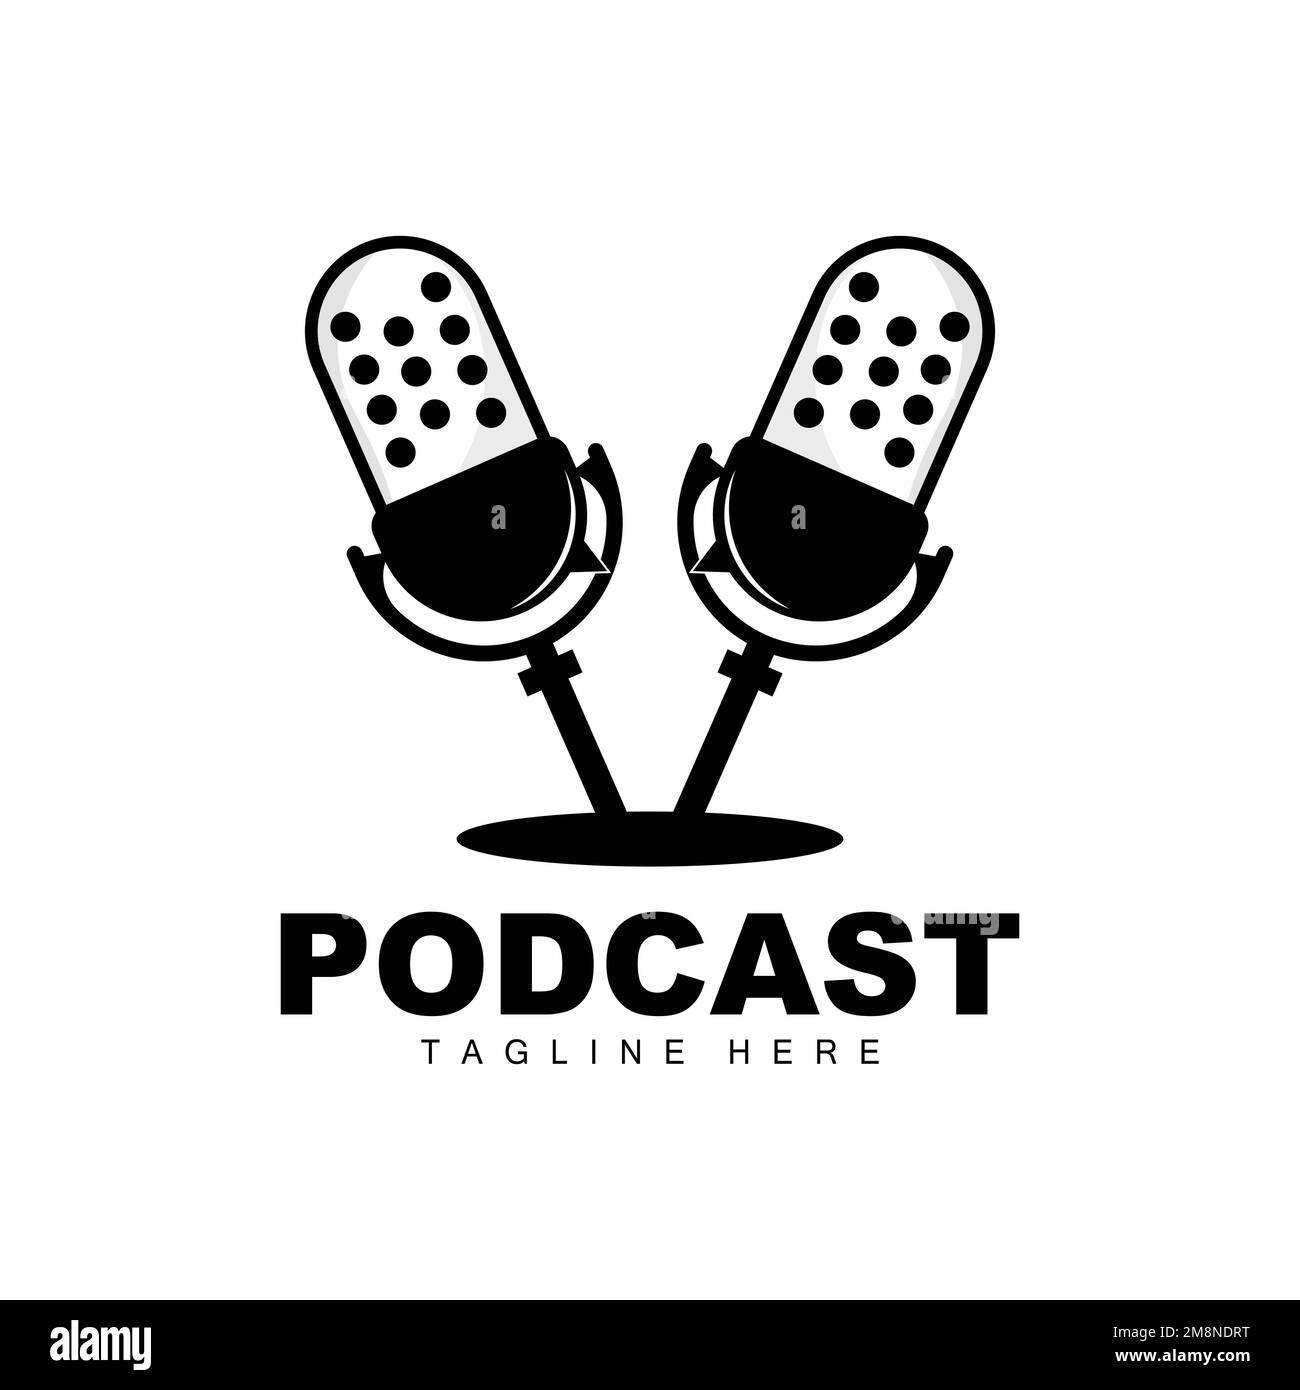 Podcast mic logo icono vector diseño de dibujos animados de micrófono retro